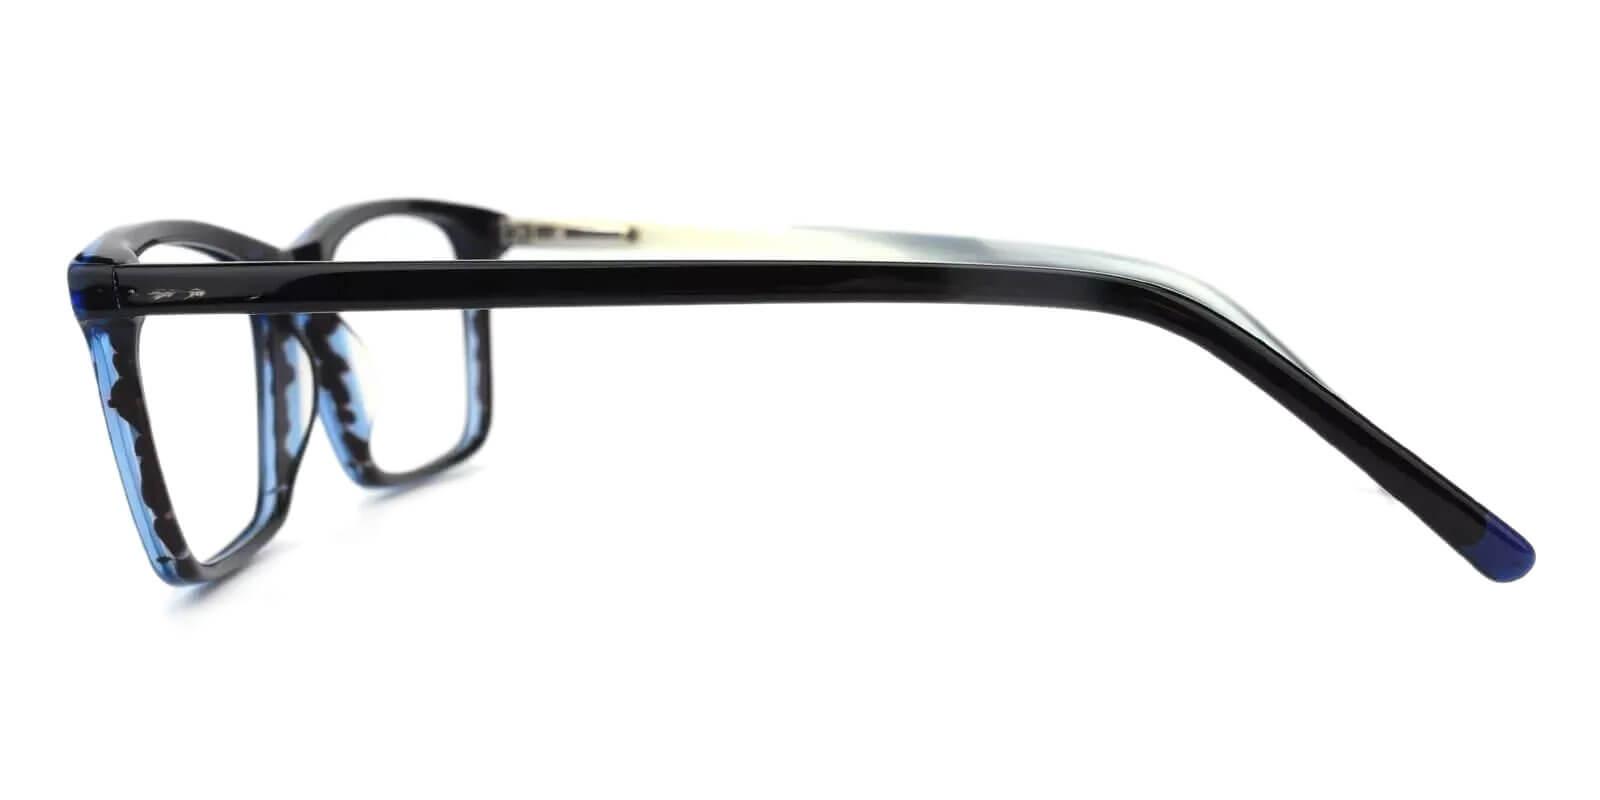 Quasqueton Striped Acetate Eyeglasses , SpringHinges , UniversalBridgeFit Frames from ABBE Glasses